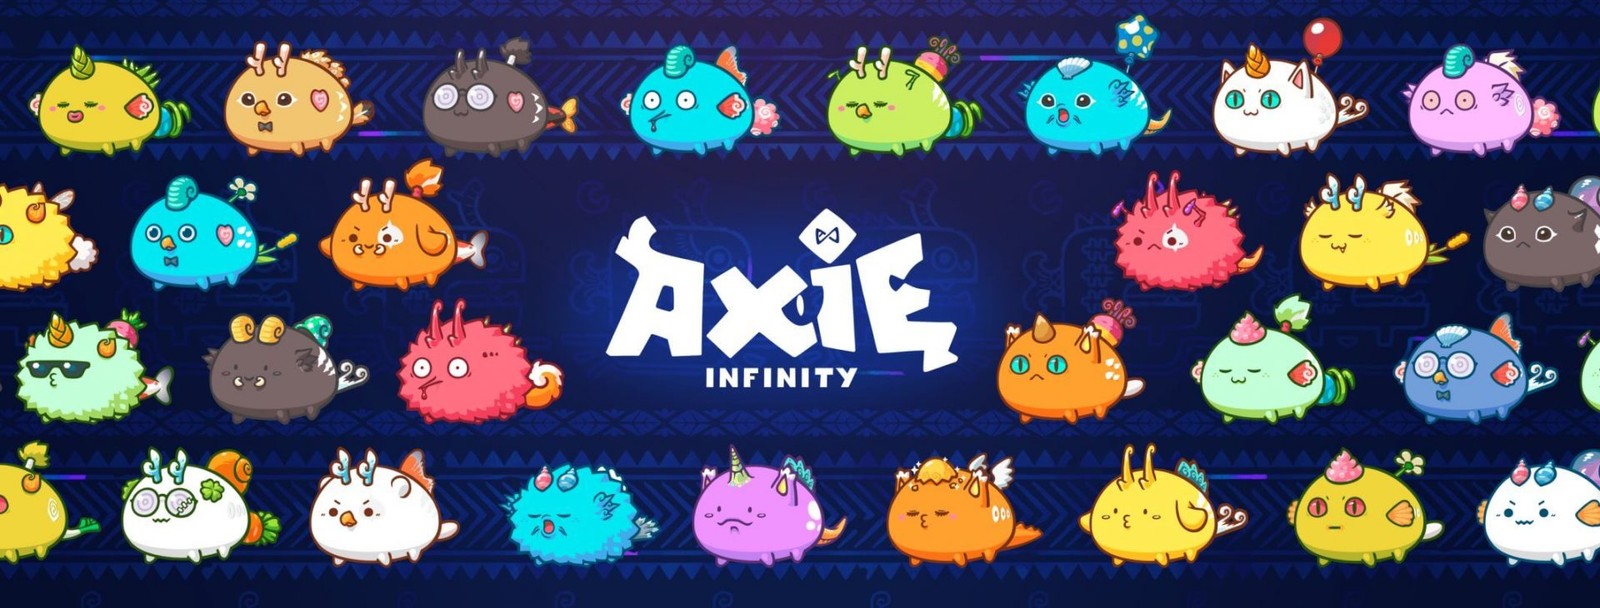 axie-infinity-cover_gxa1